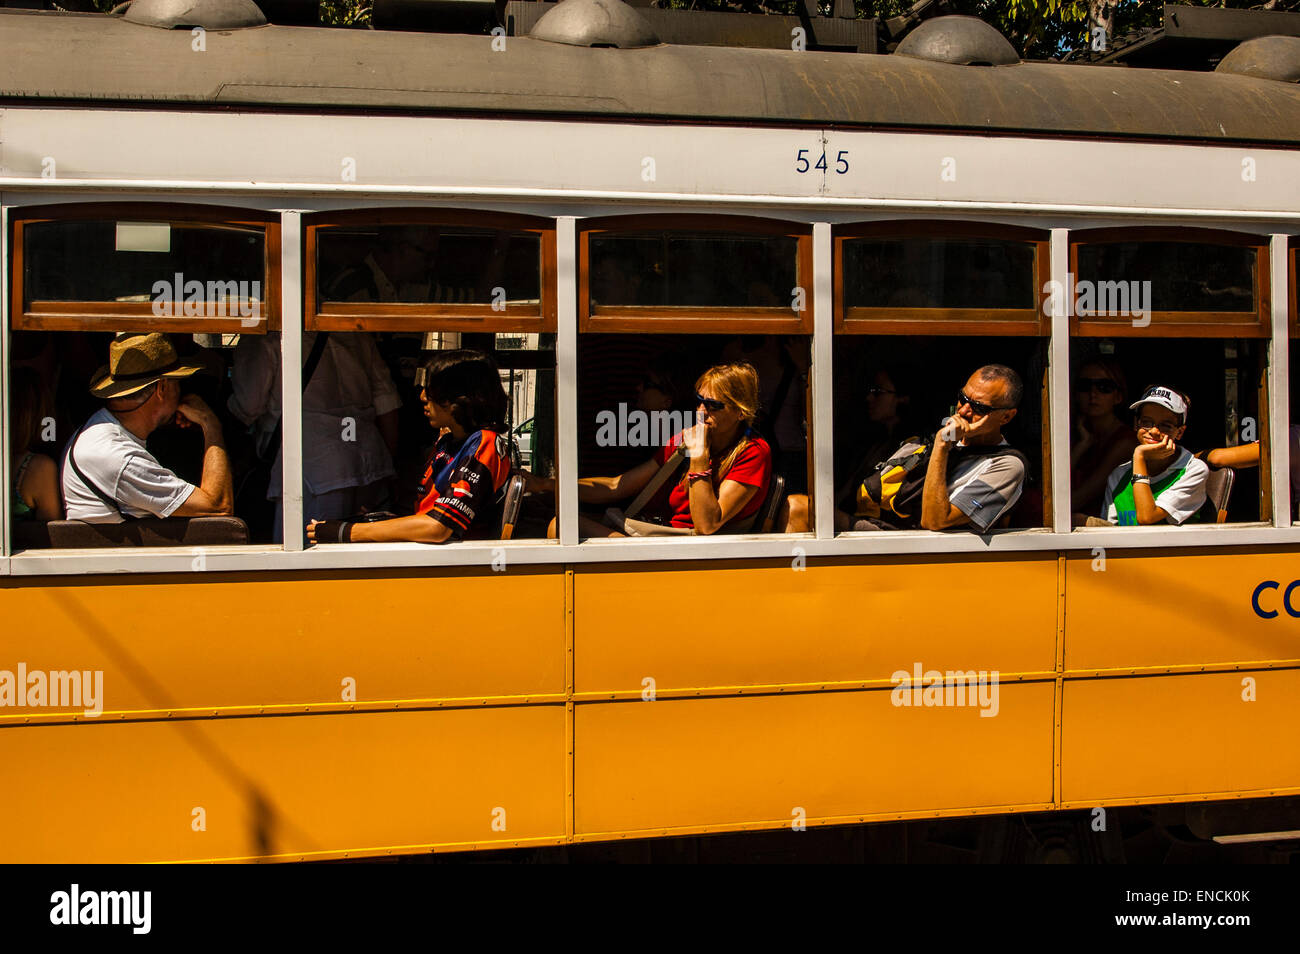 Tram storico, Tramvia, tram, Lisbona, Portgal Foto Stock